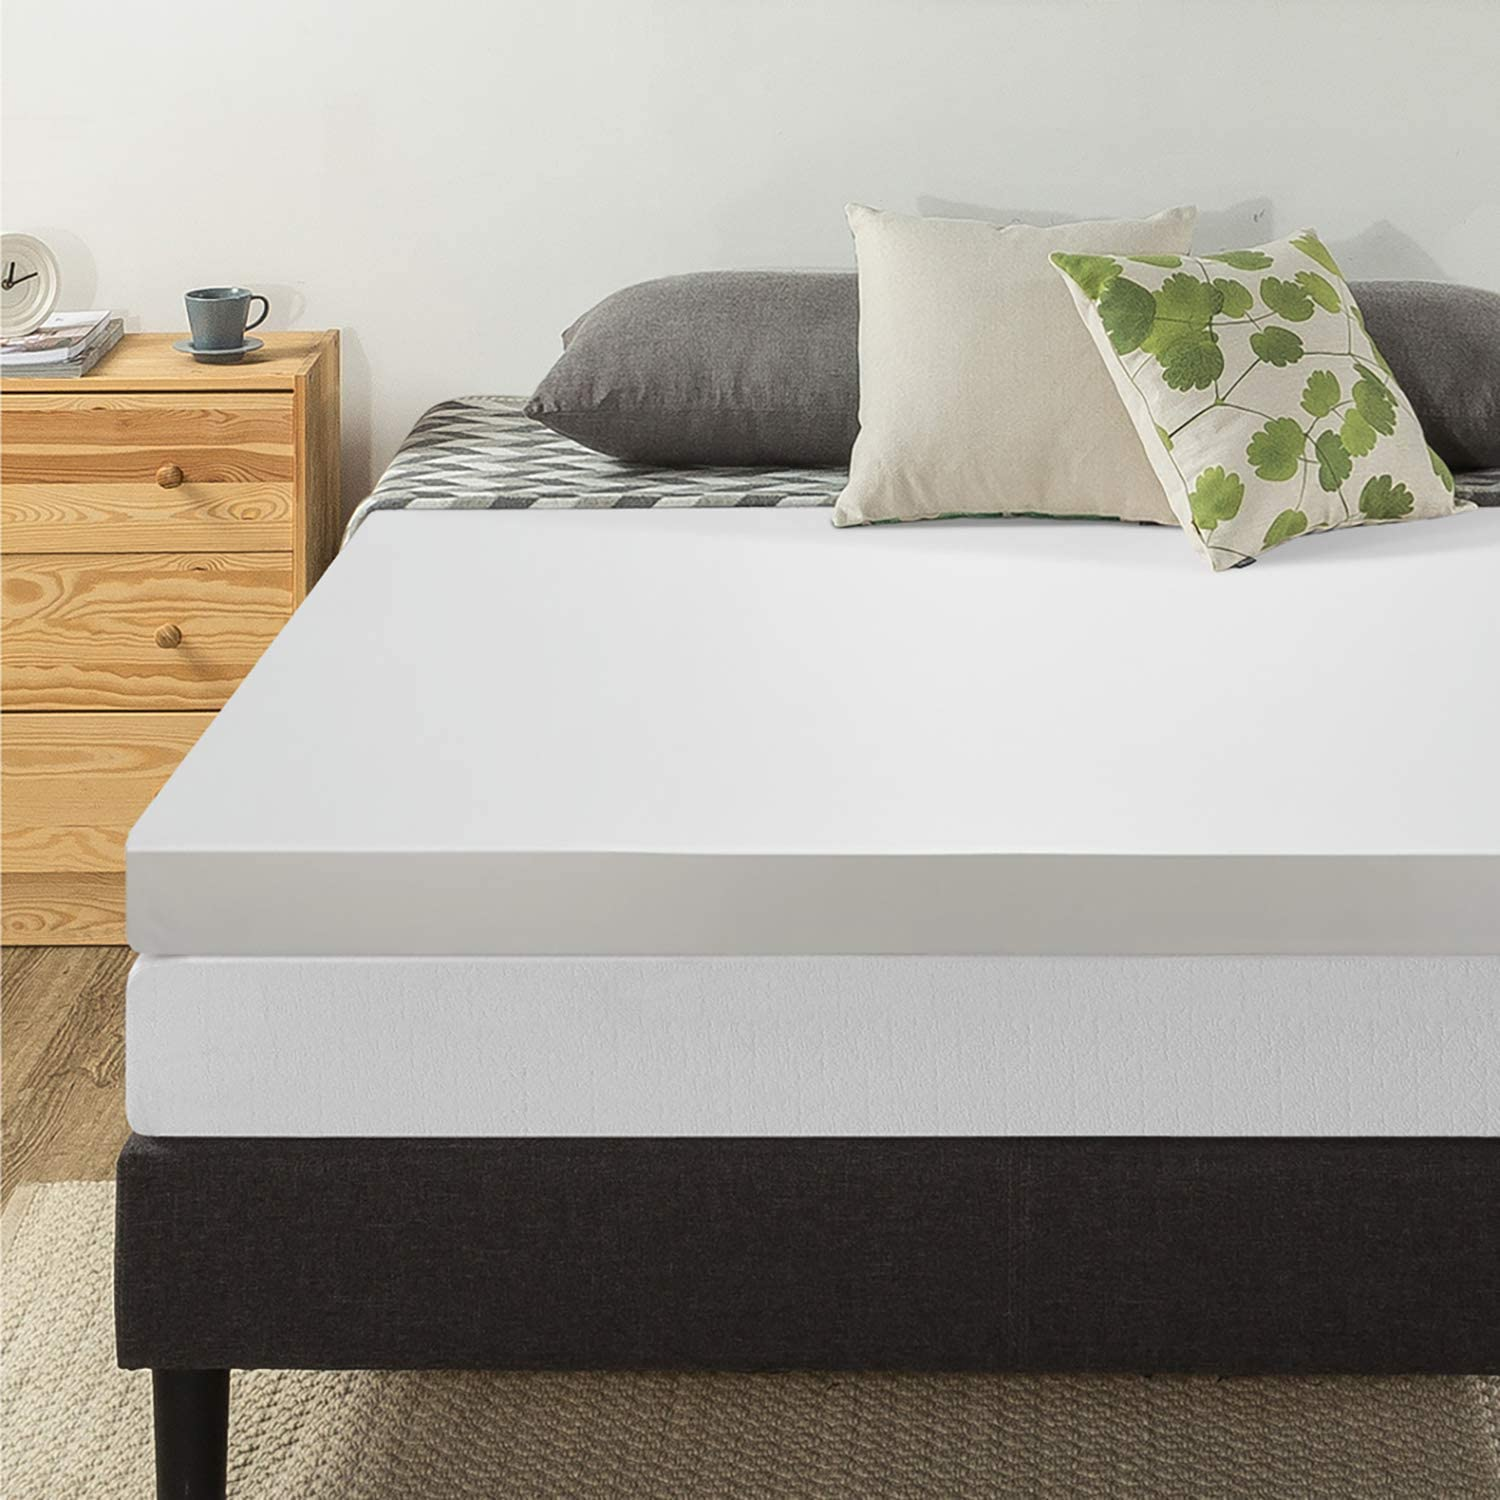 You can use a mattress topper on top of a memory foam mattress